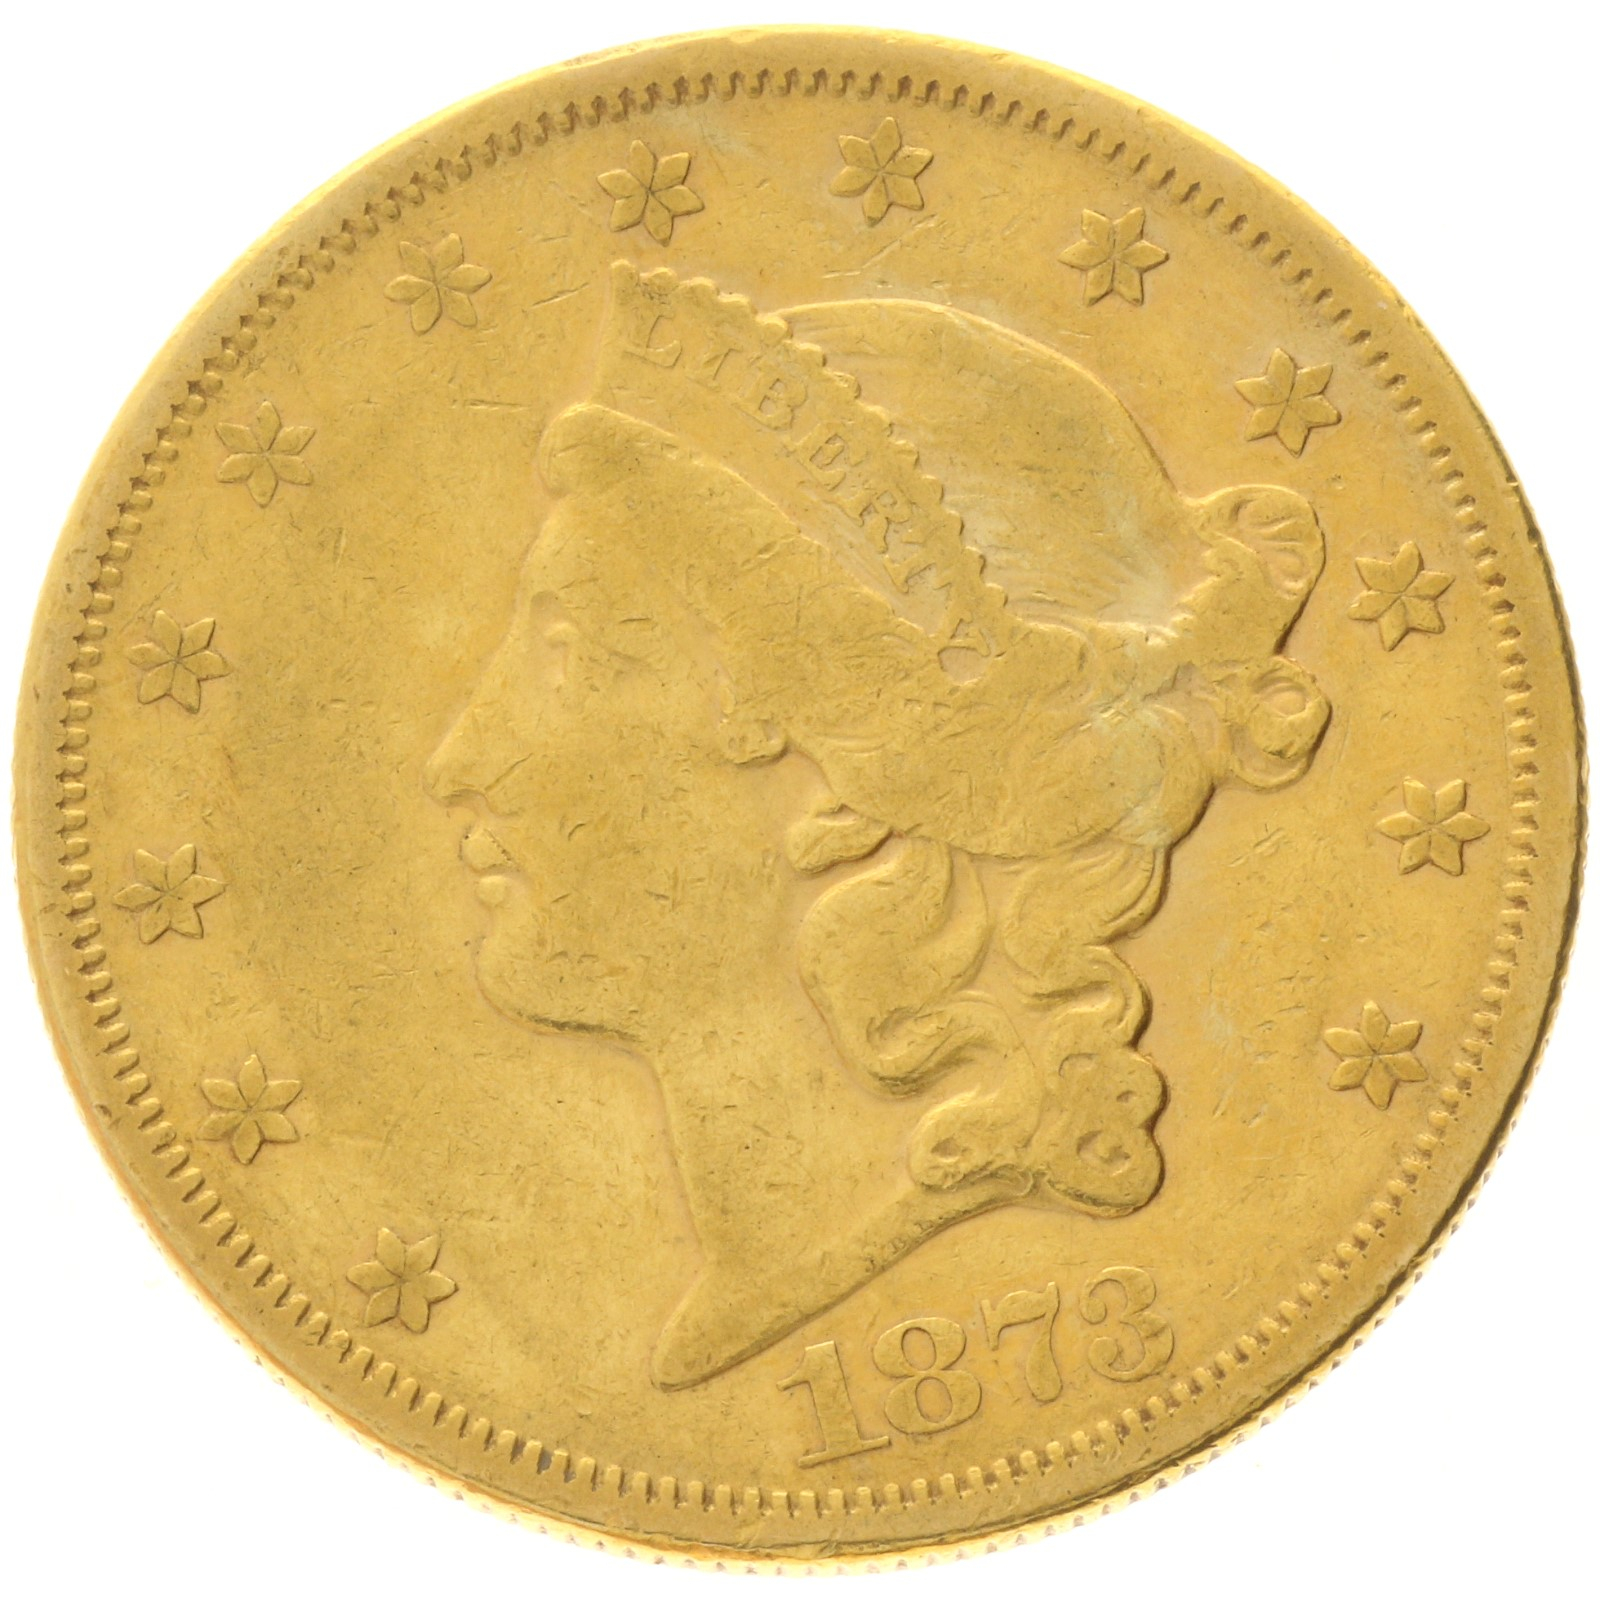 USA - 20 dollars 1873 - S - Closed 3 - Liberty head